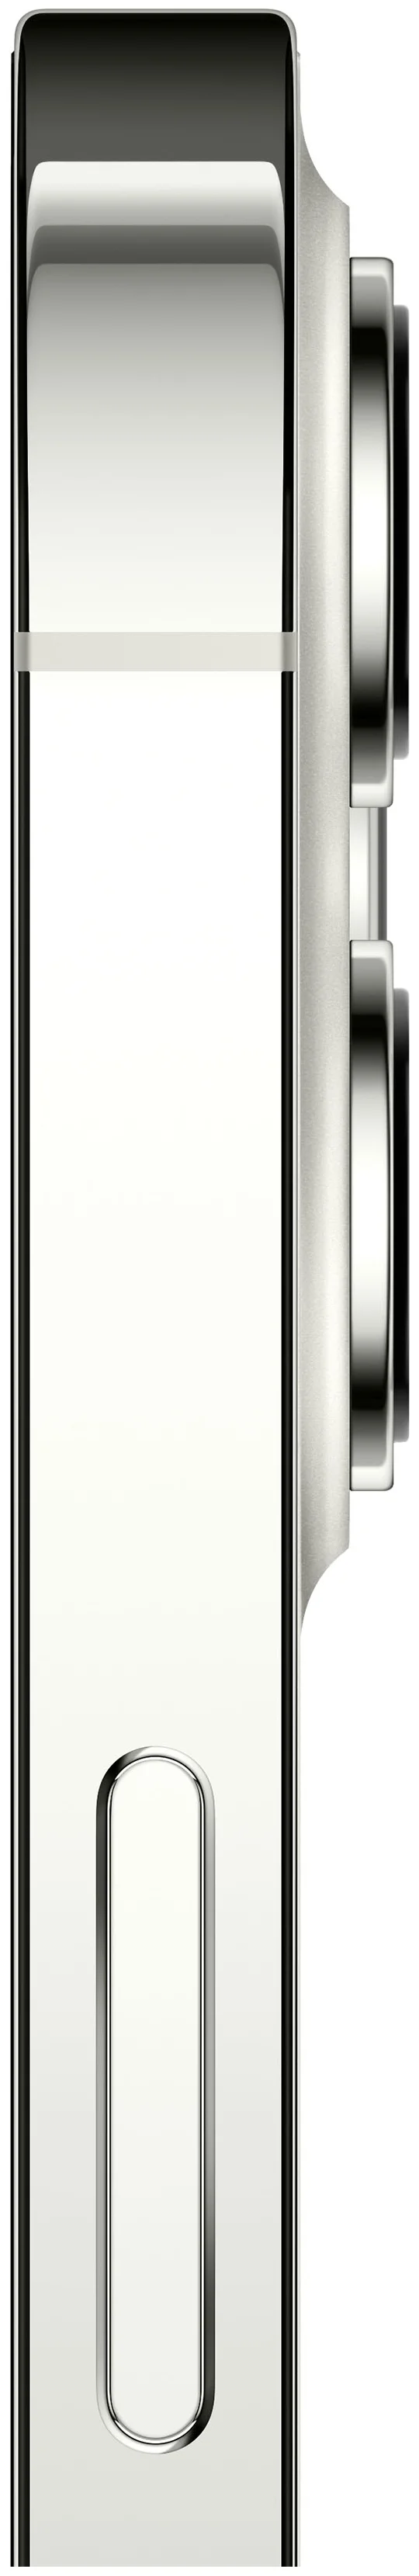 Apple iPhone 12 Pro Max 512GB - интернет: 4G LTE, 5G